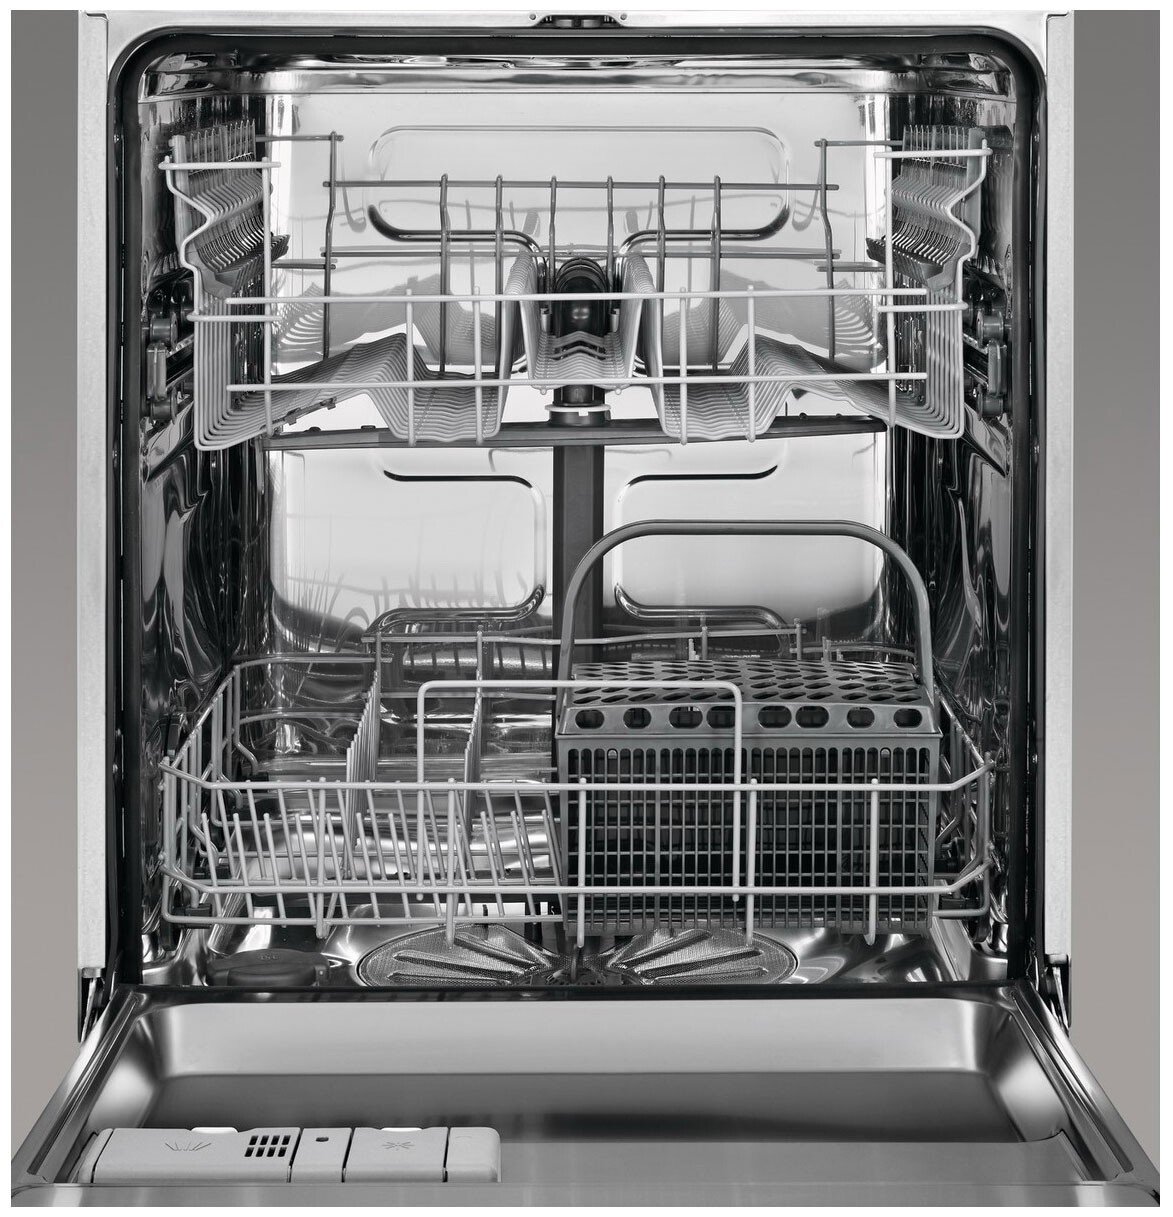 Посудомоечная машина Zanussi ZDLN91511 цена 20022.20 грн - фотография 2